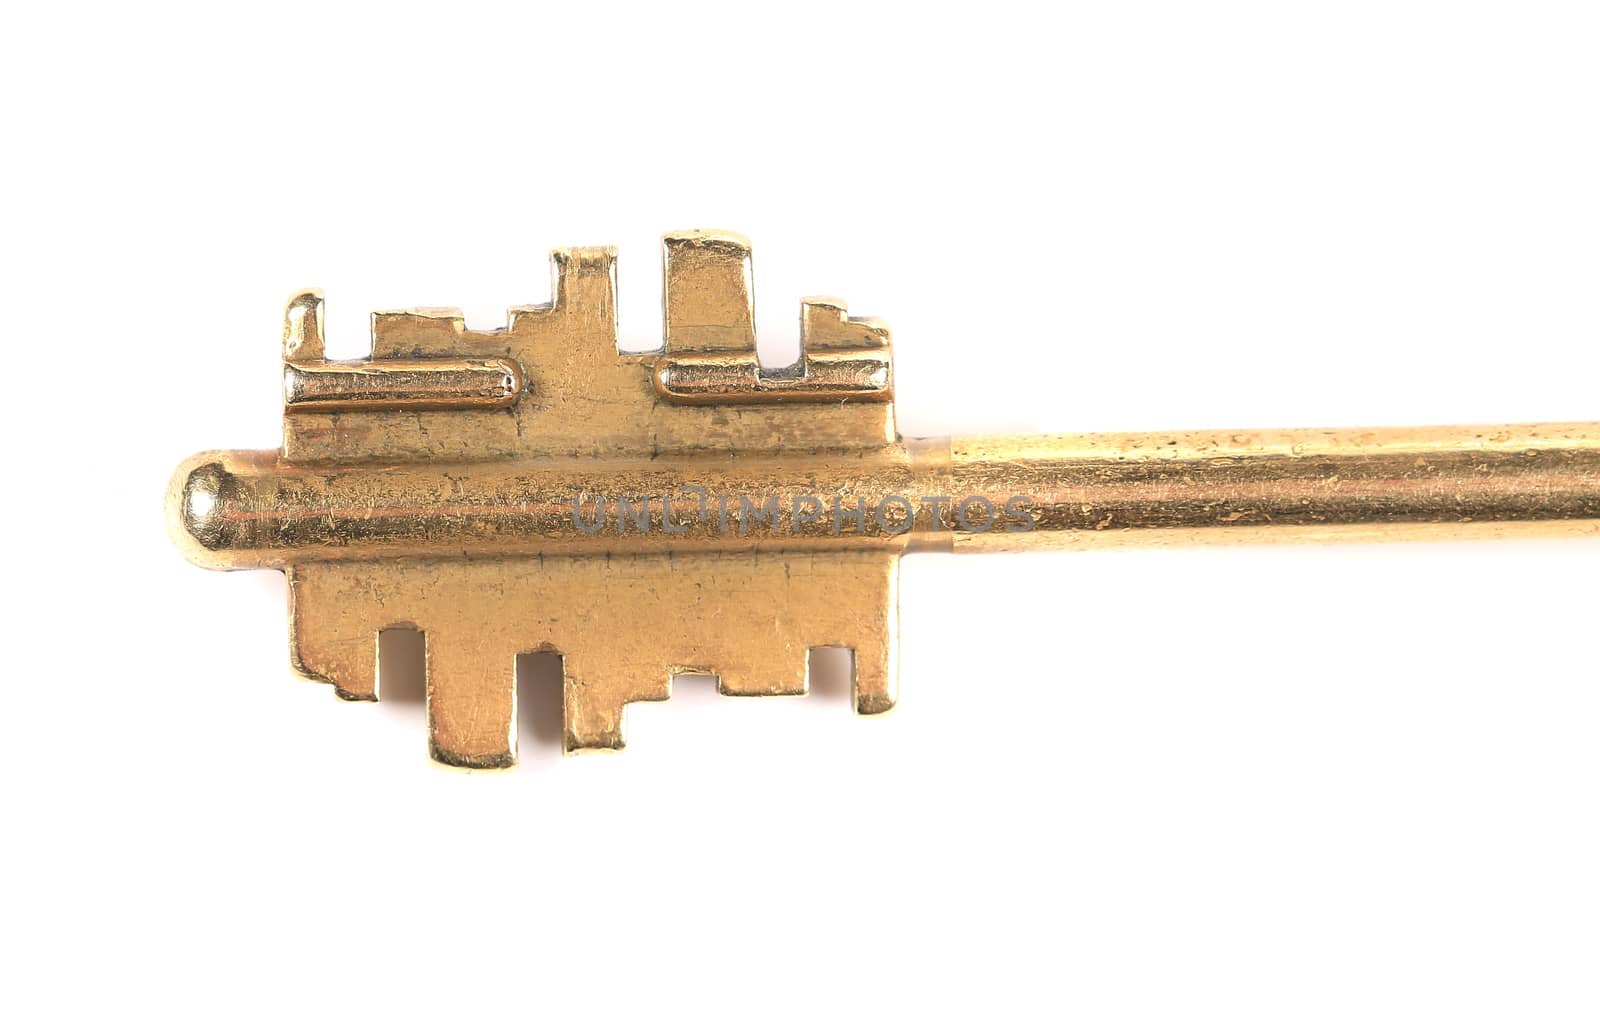 Head of bronze key. Isolated on white background.